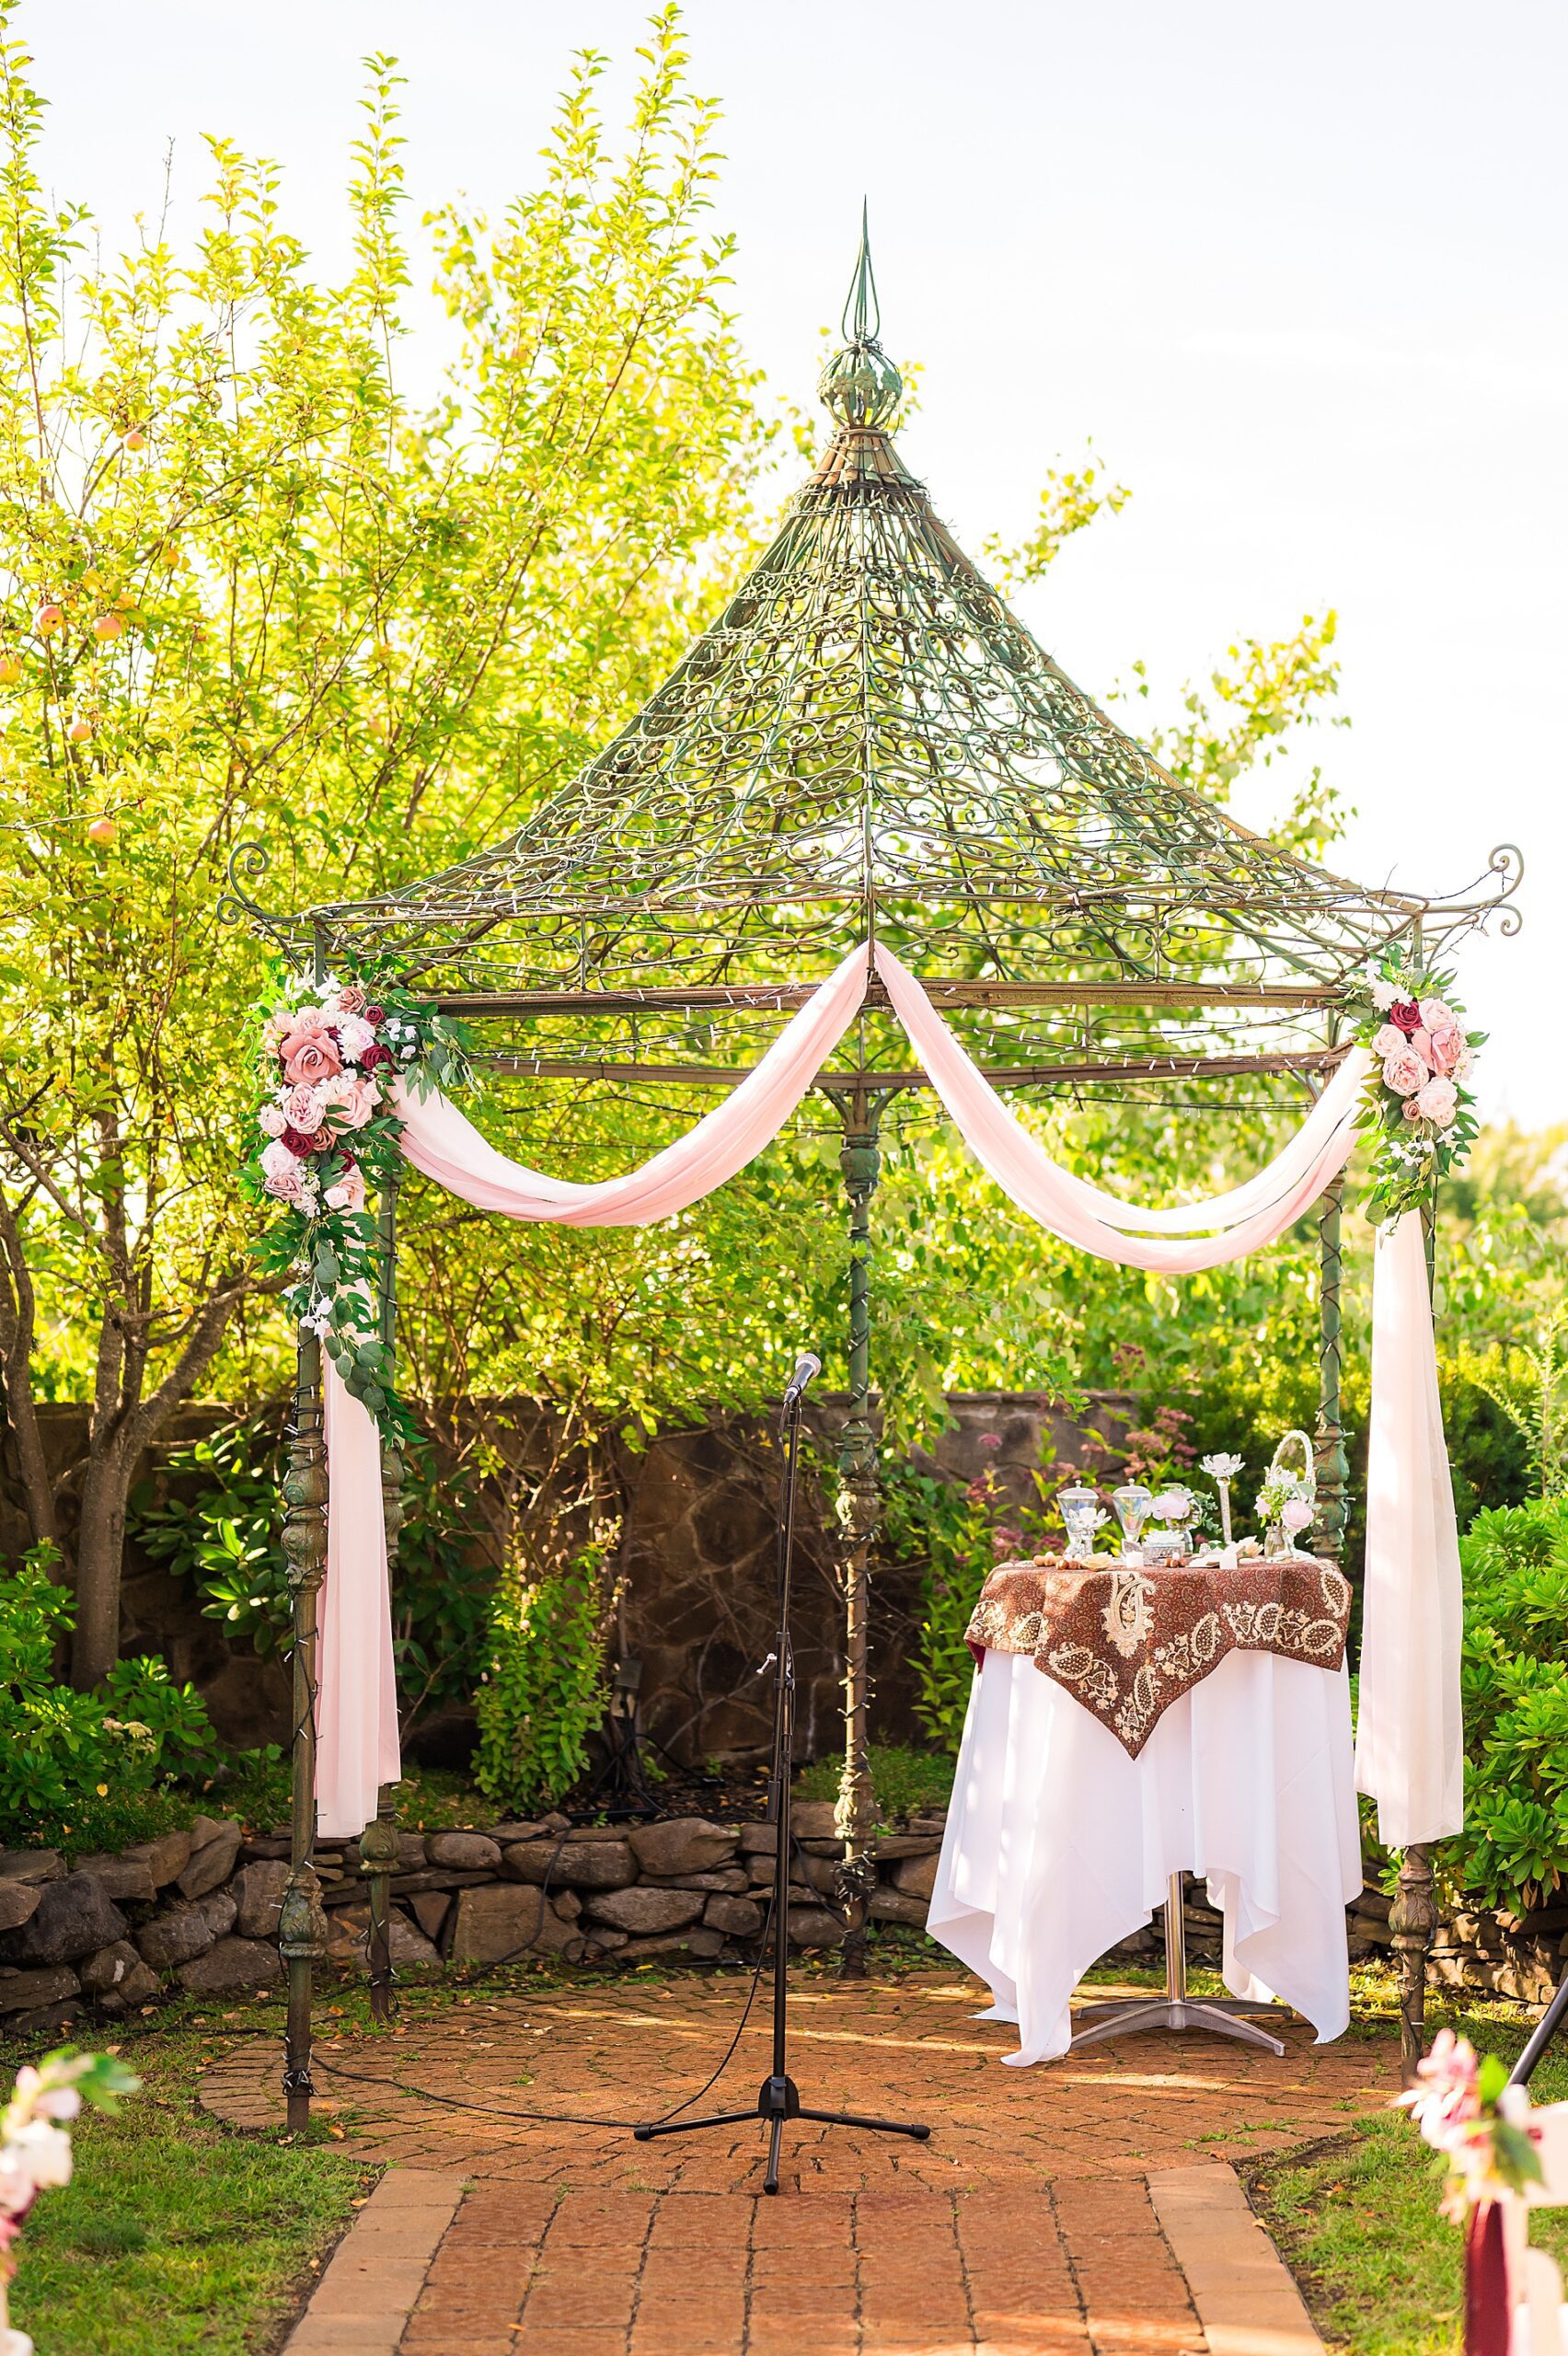 Dreamy outdoor Wedding ceremony at Granite Rose